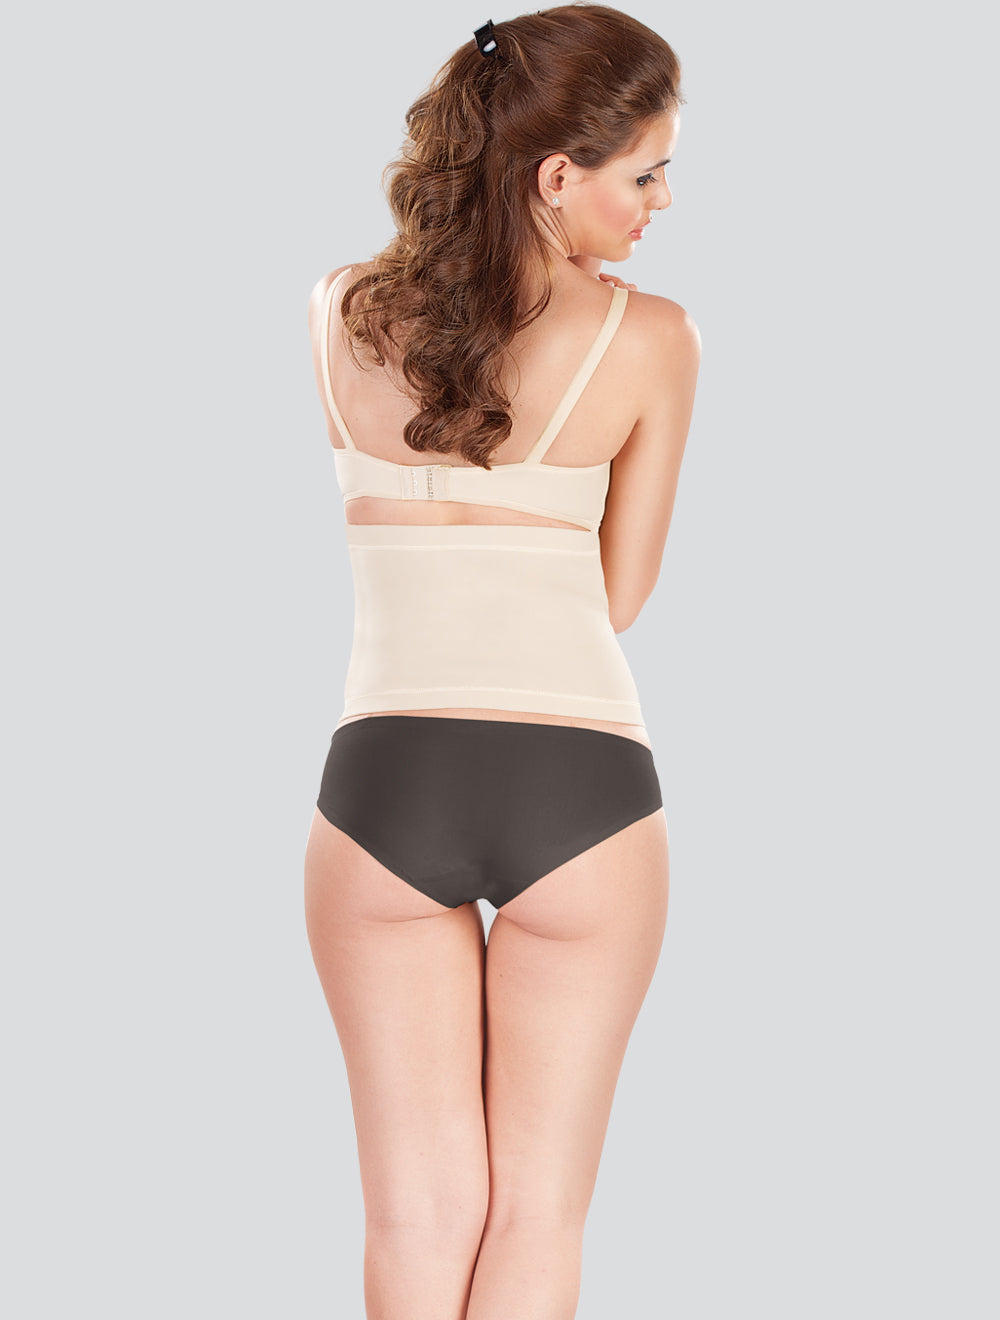 WOWENY Women's Cami Shaper with Built in Bra Tummy Control Camisole Tank  Top Shapewear Body Shaper